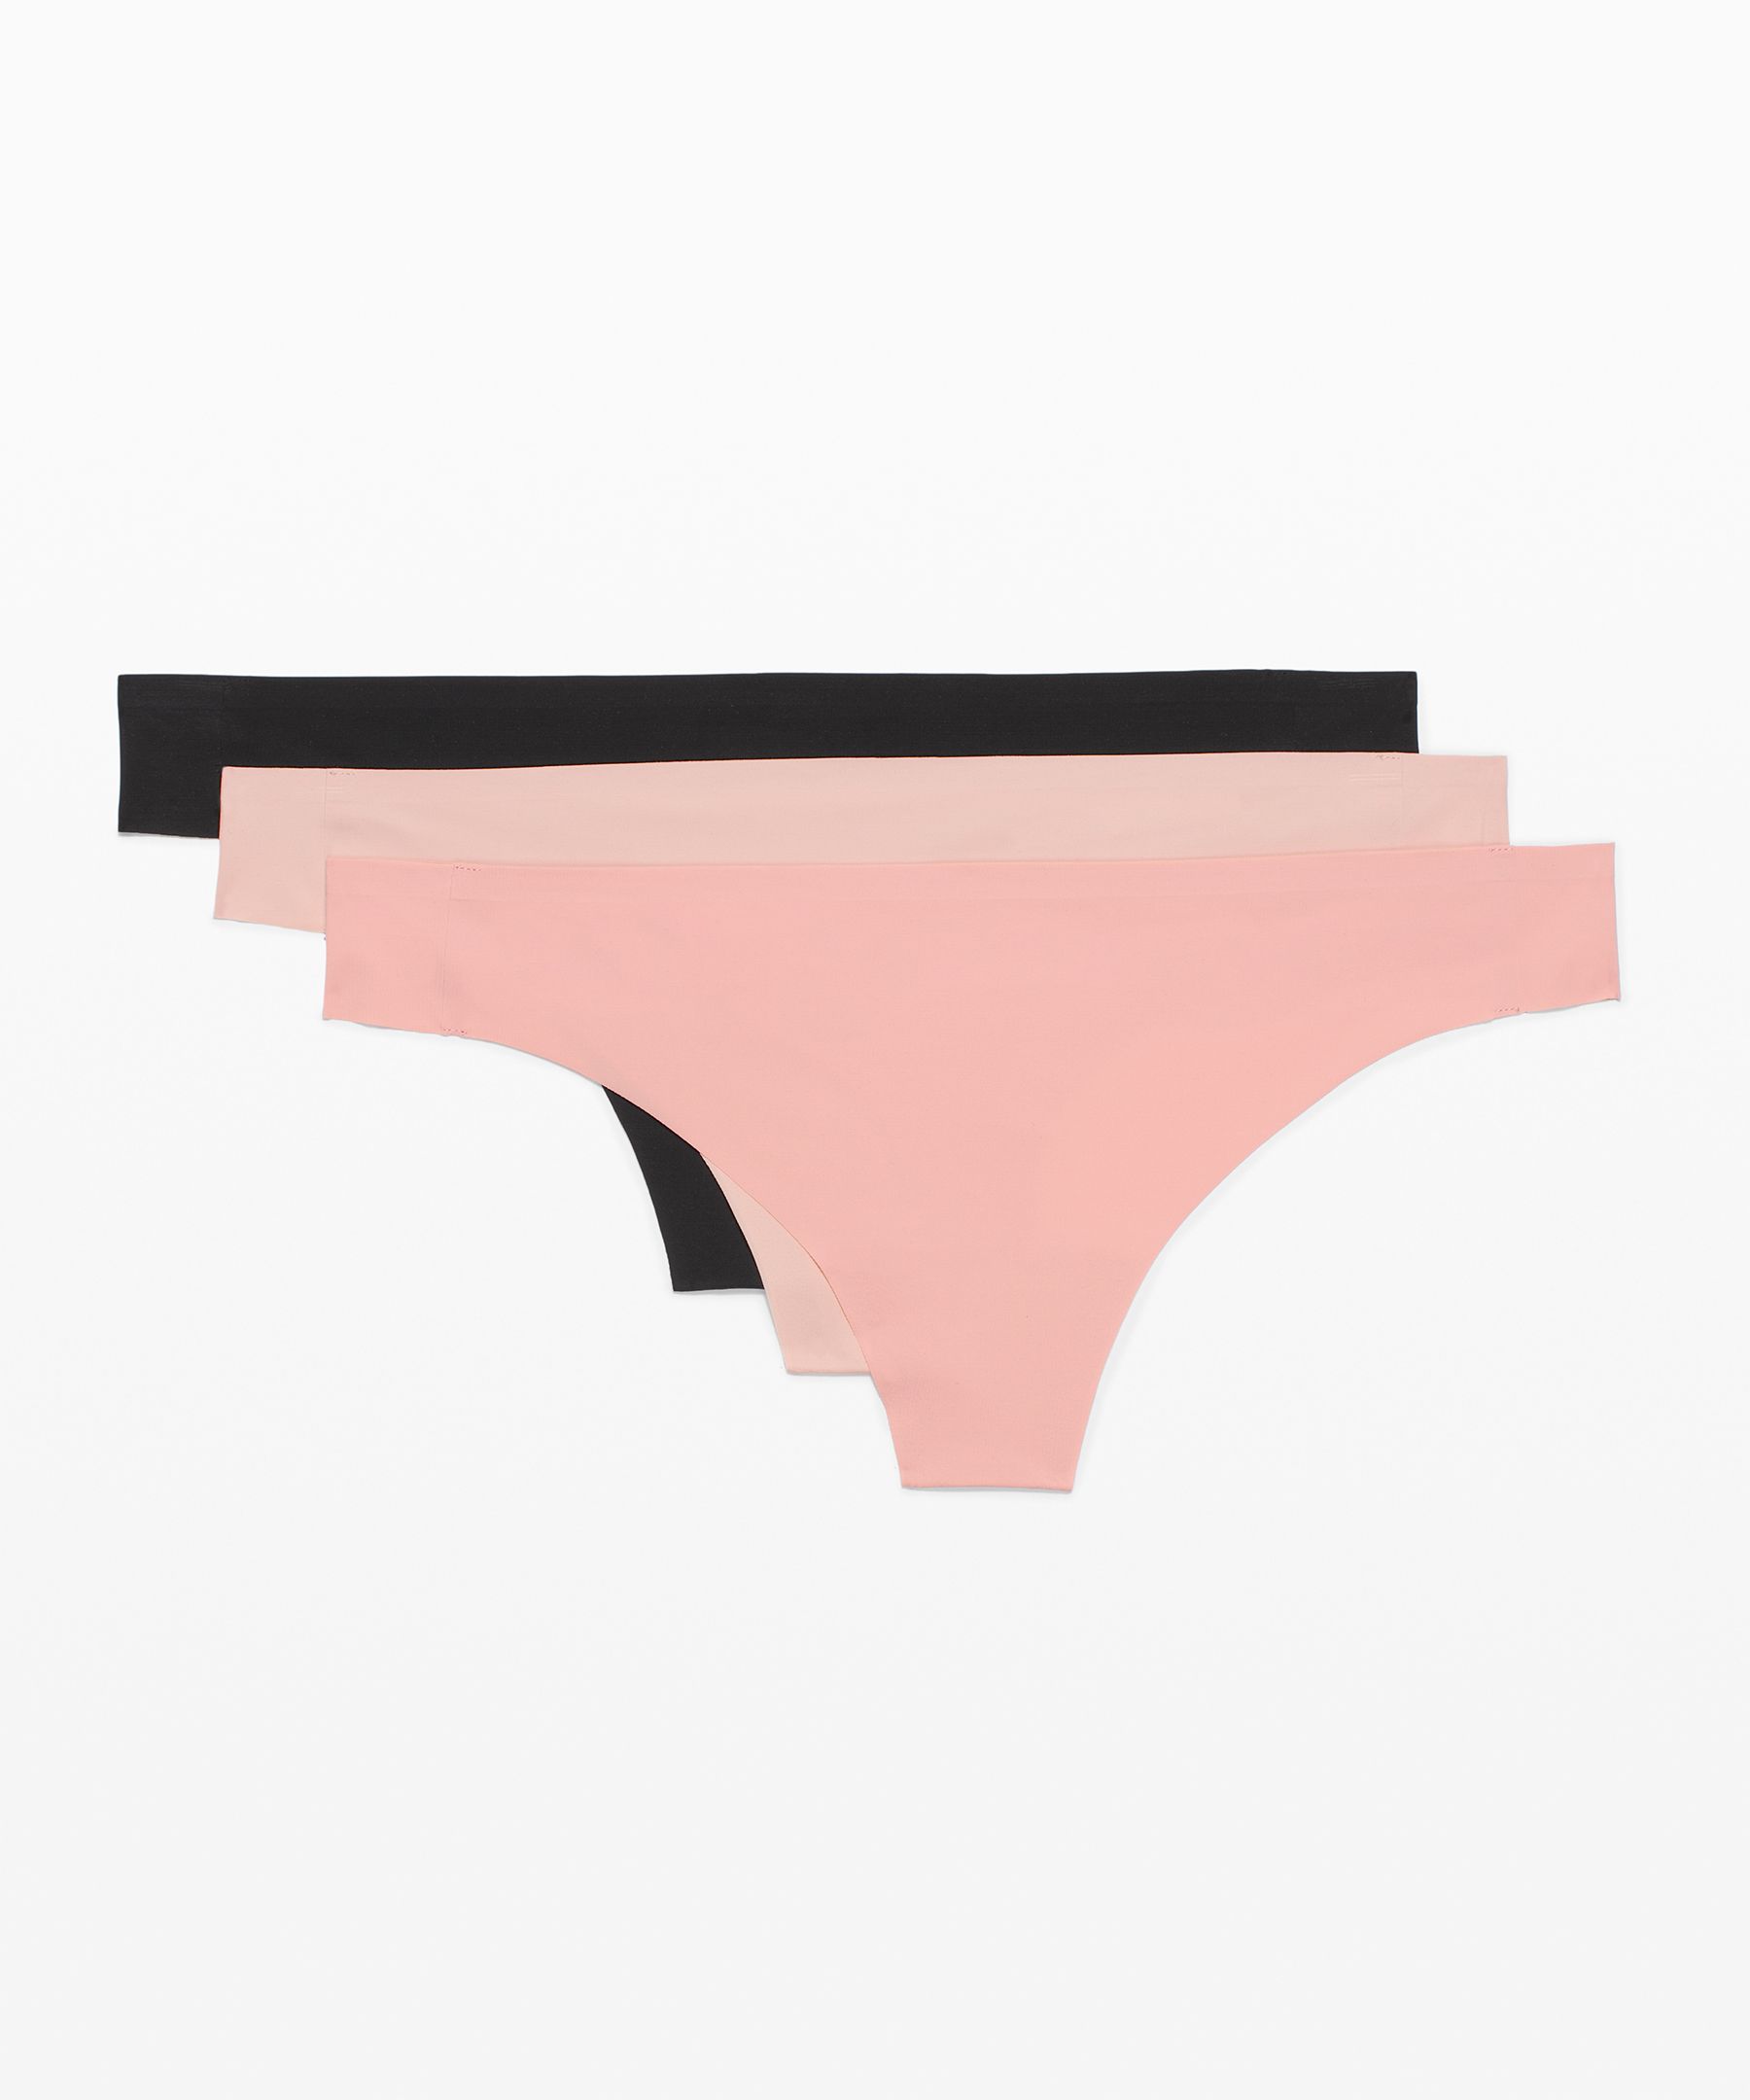 lululemon womens underwear